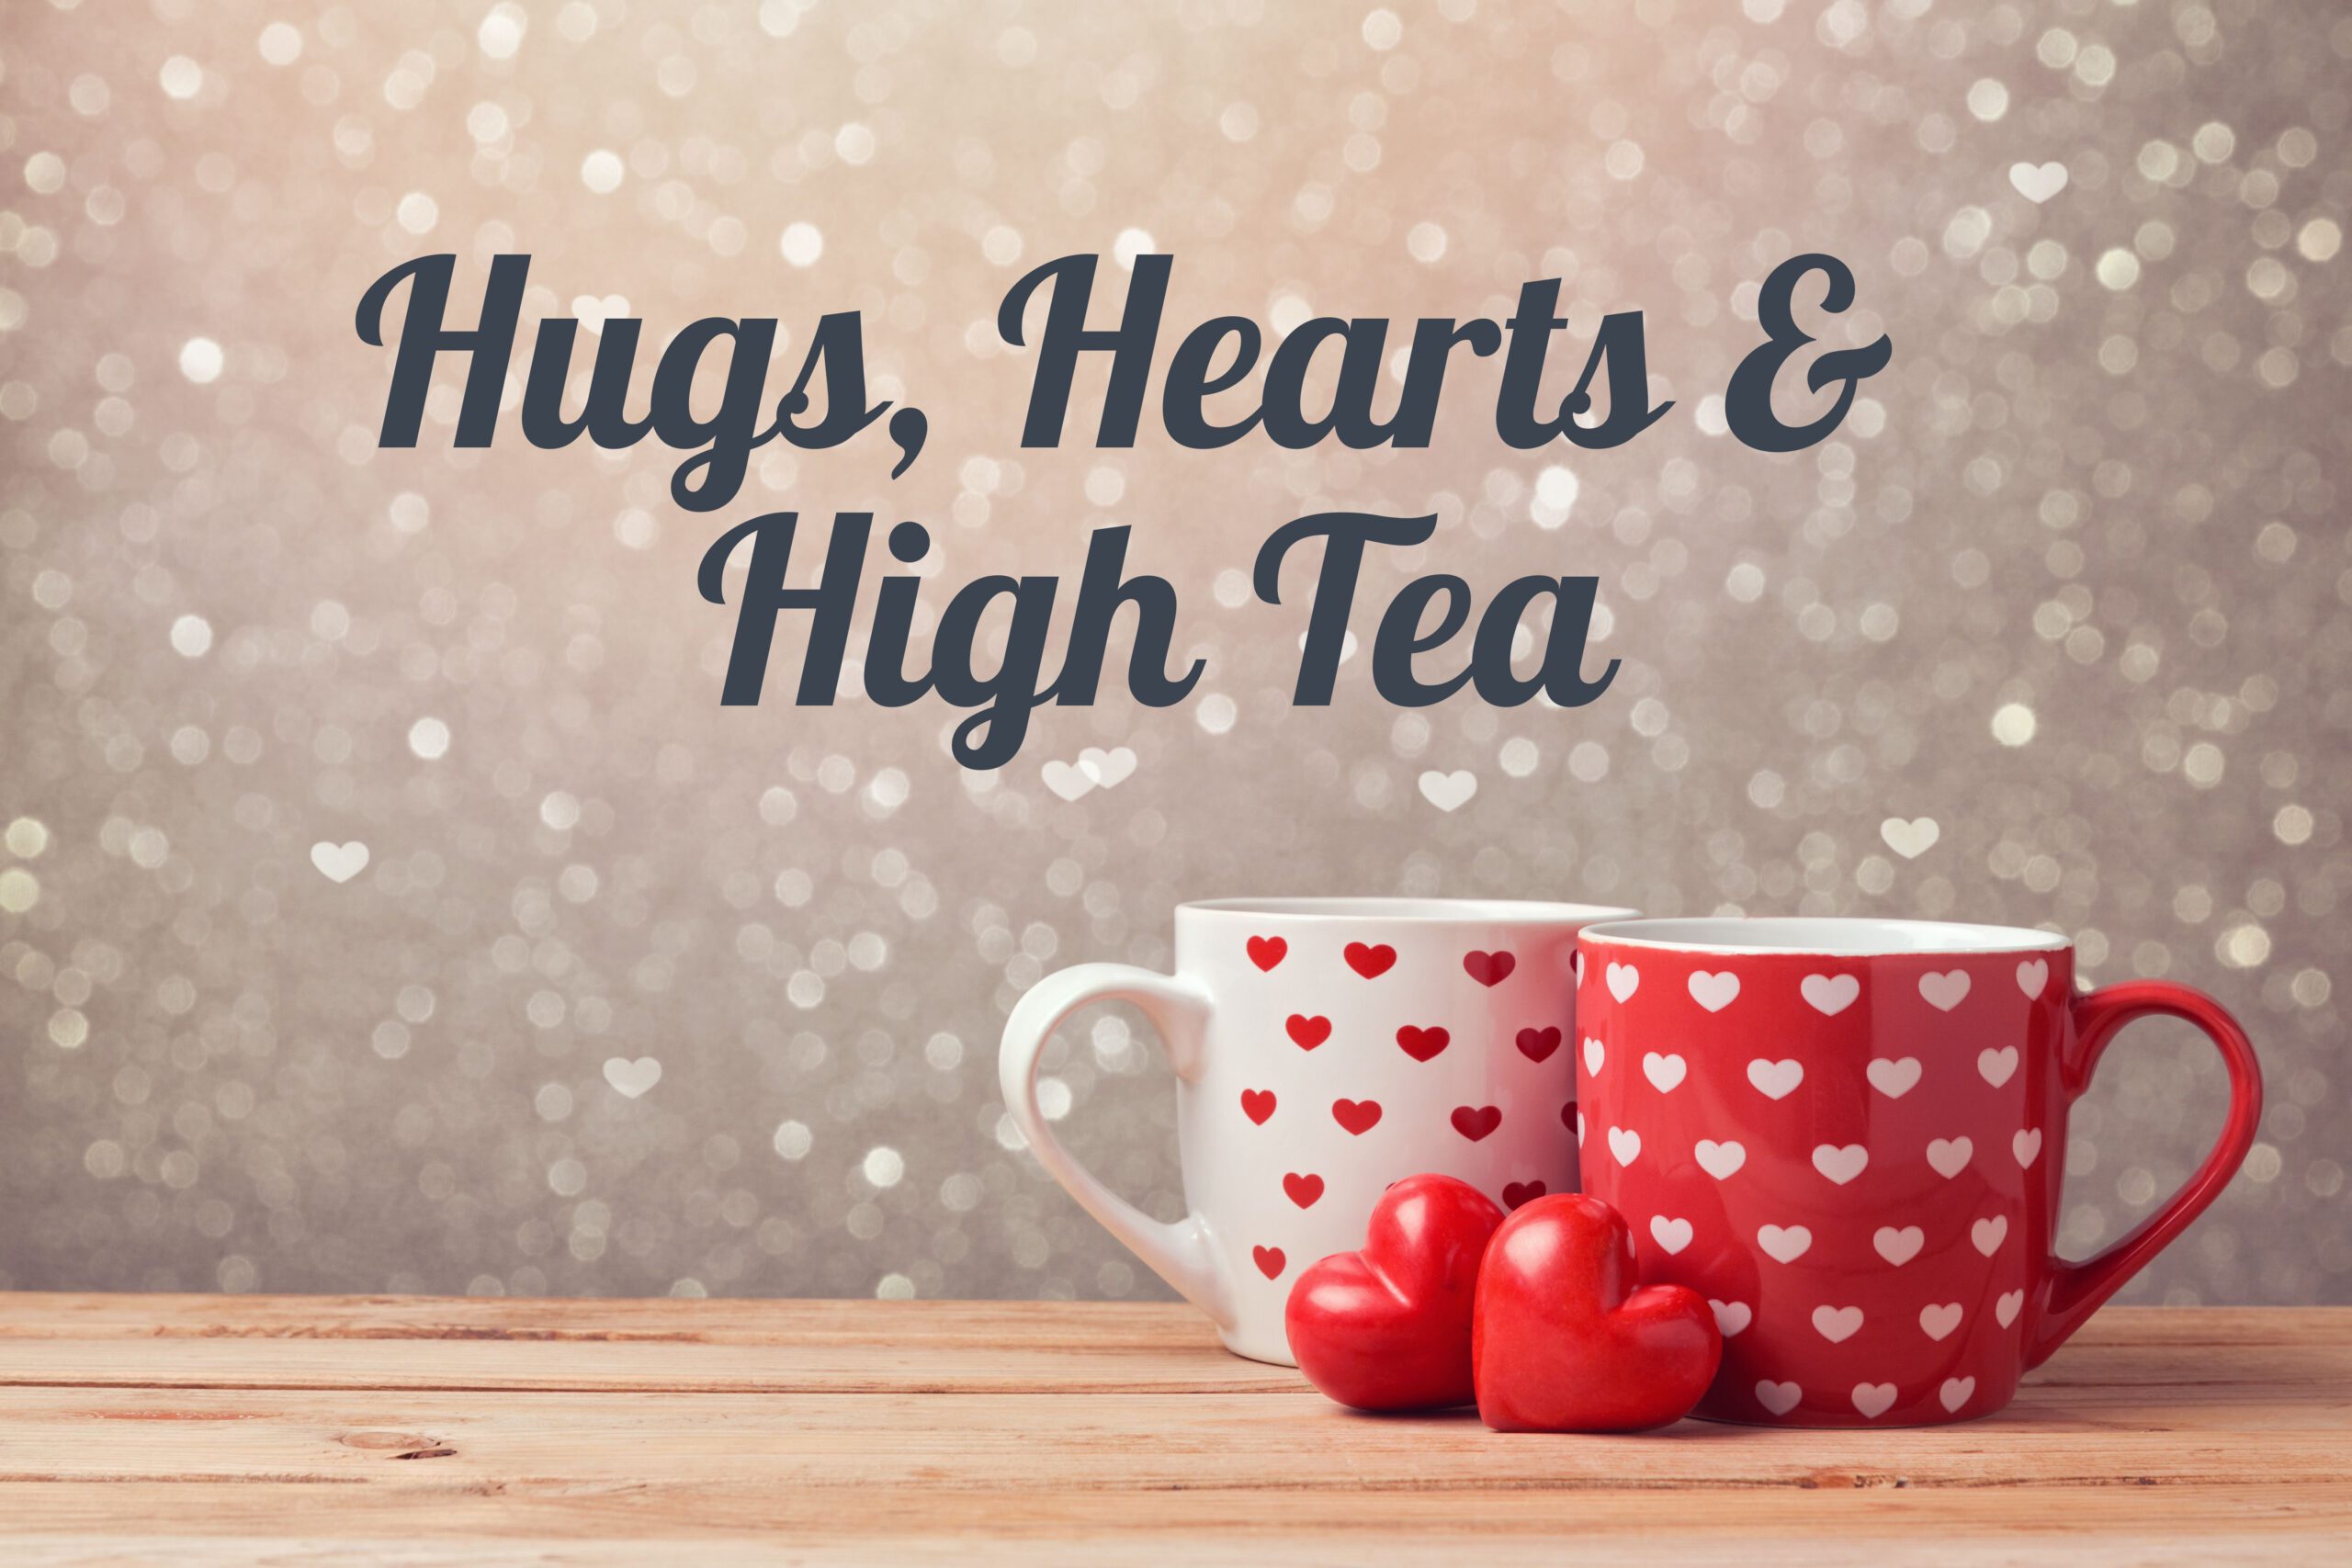 Hugs, Hearts & High Tea